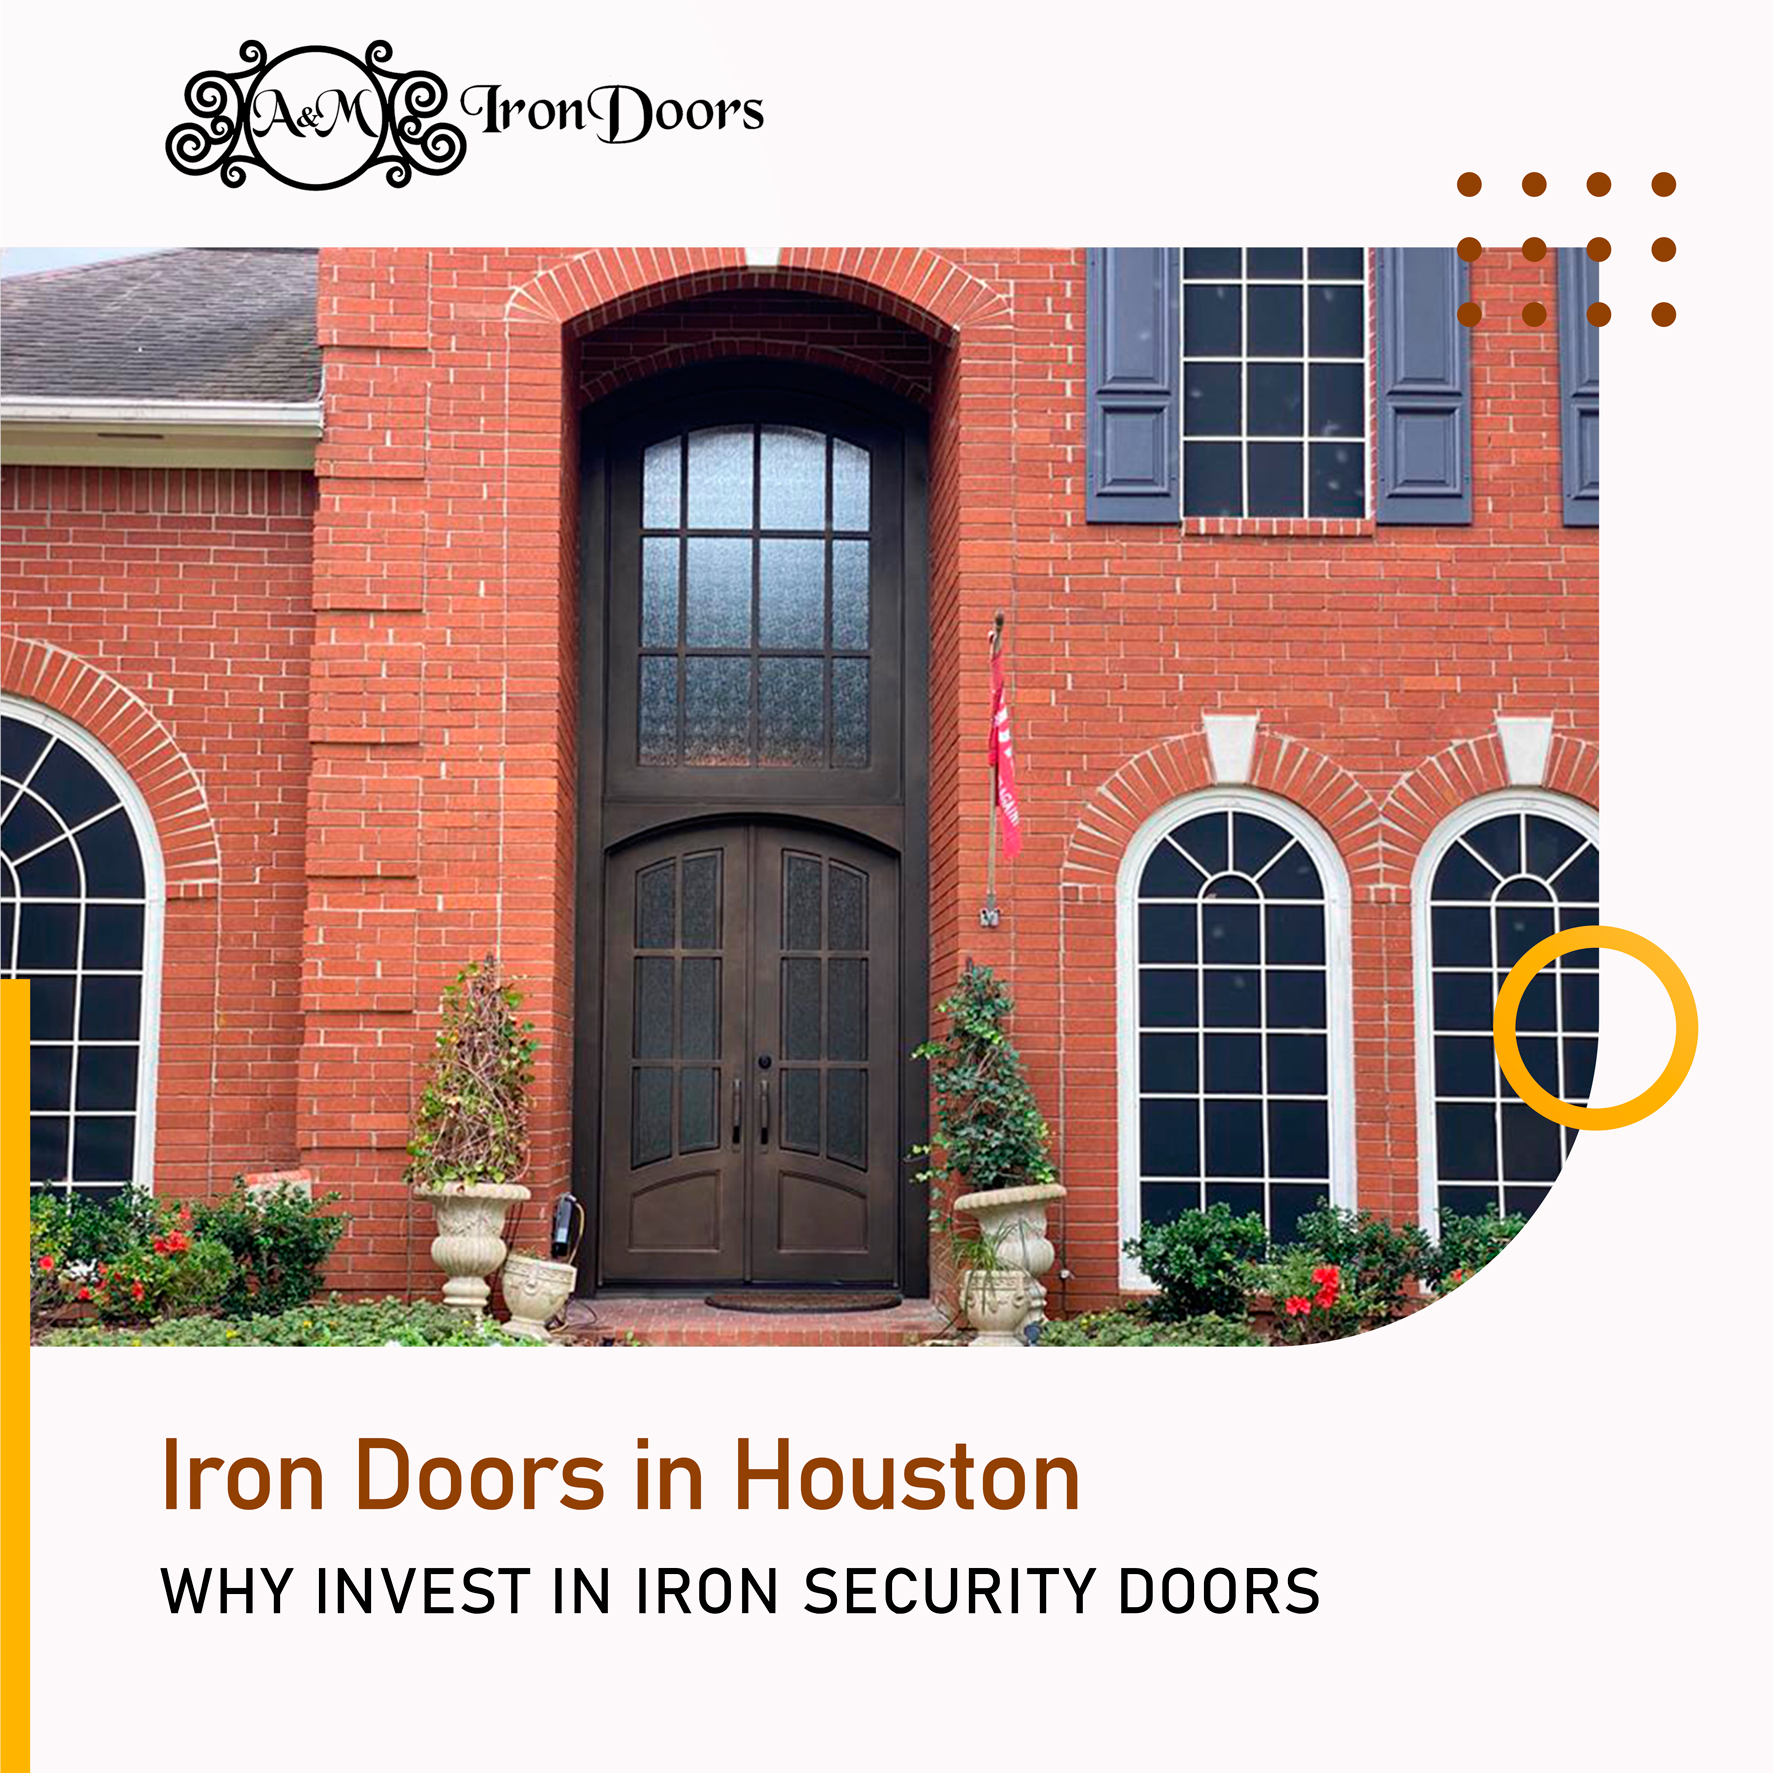 17 Iron Doors in Houston